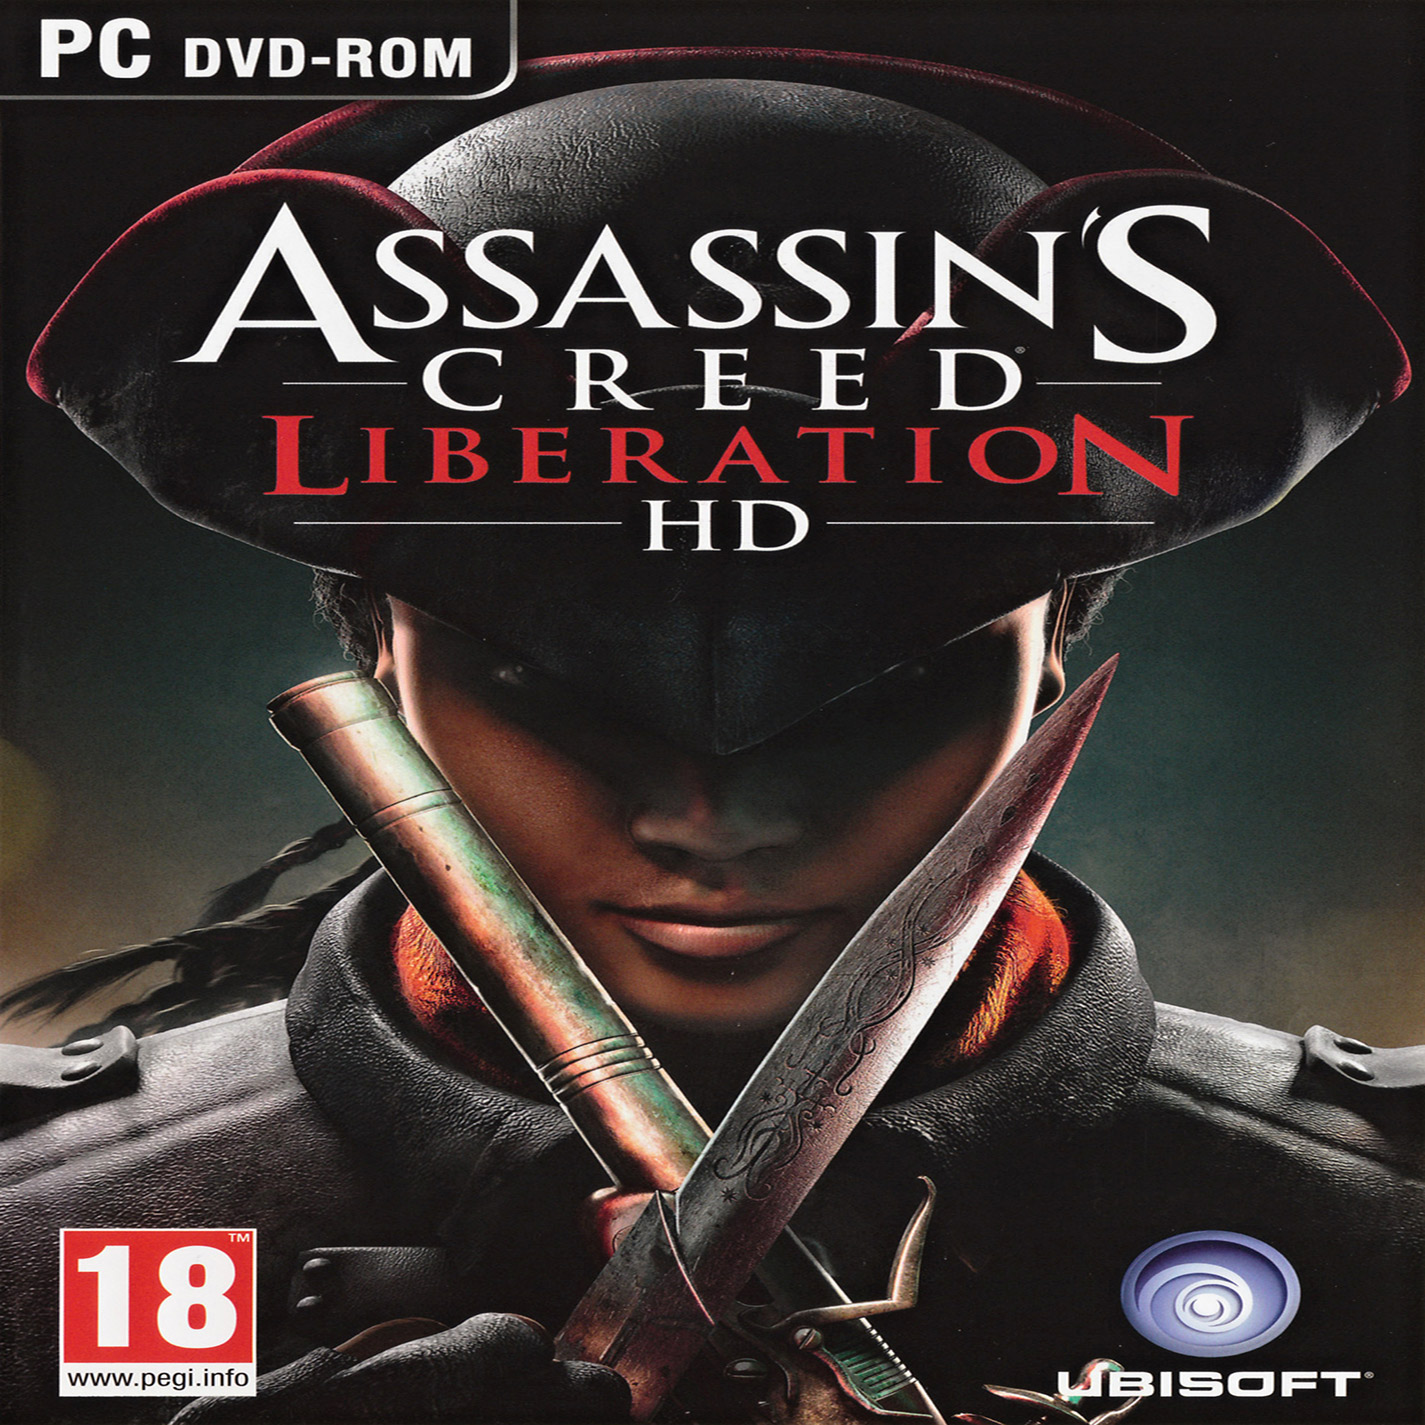 Assassins Creed: Liberation HD - pedn CD obal